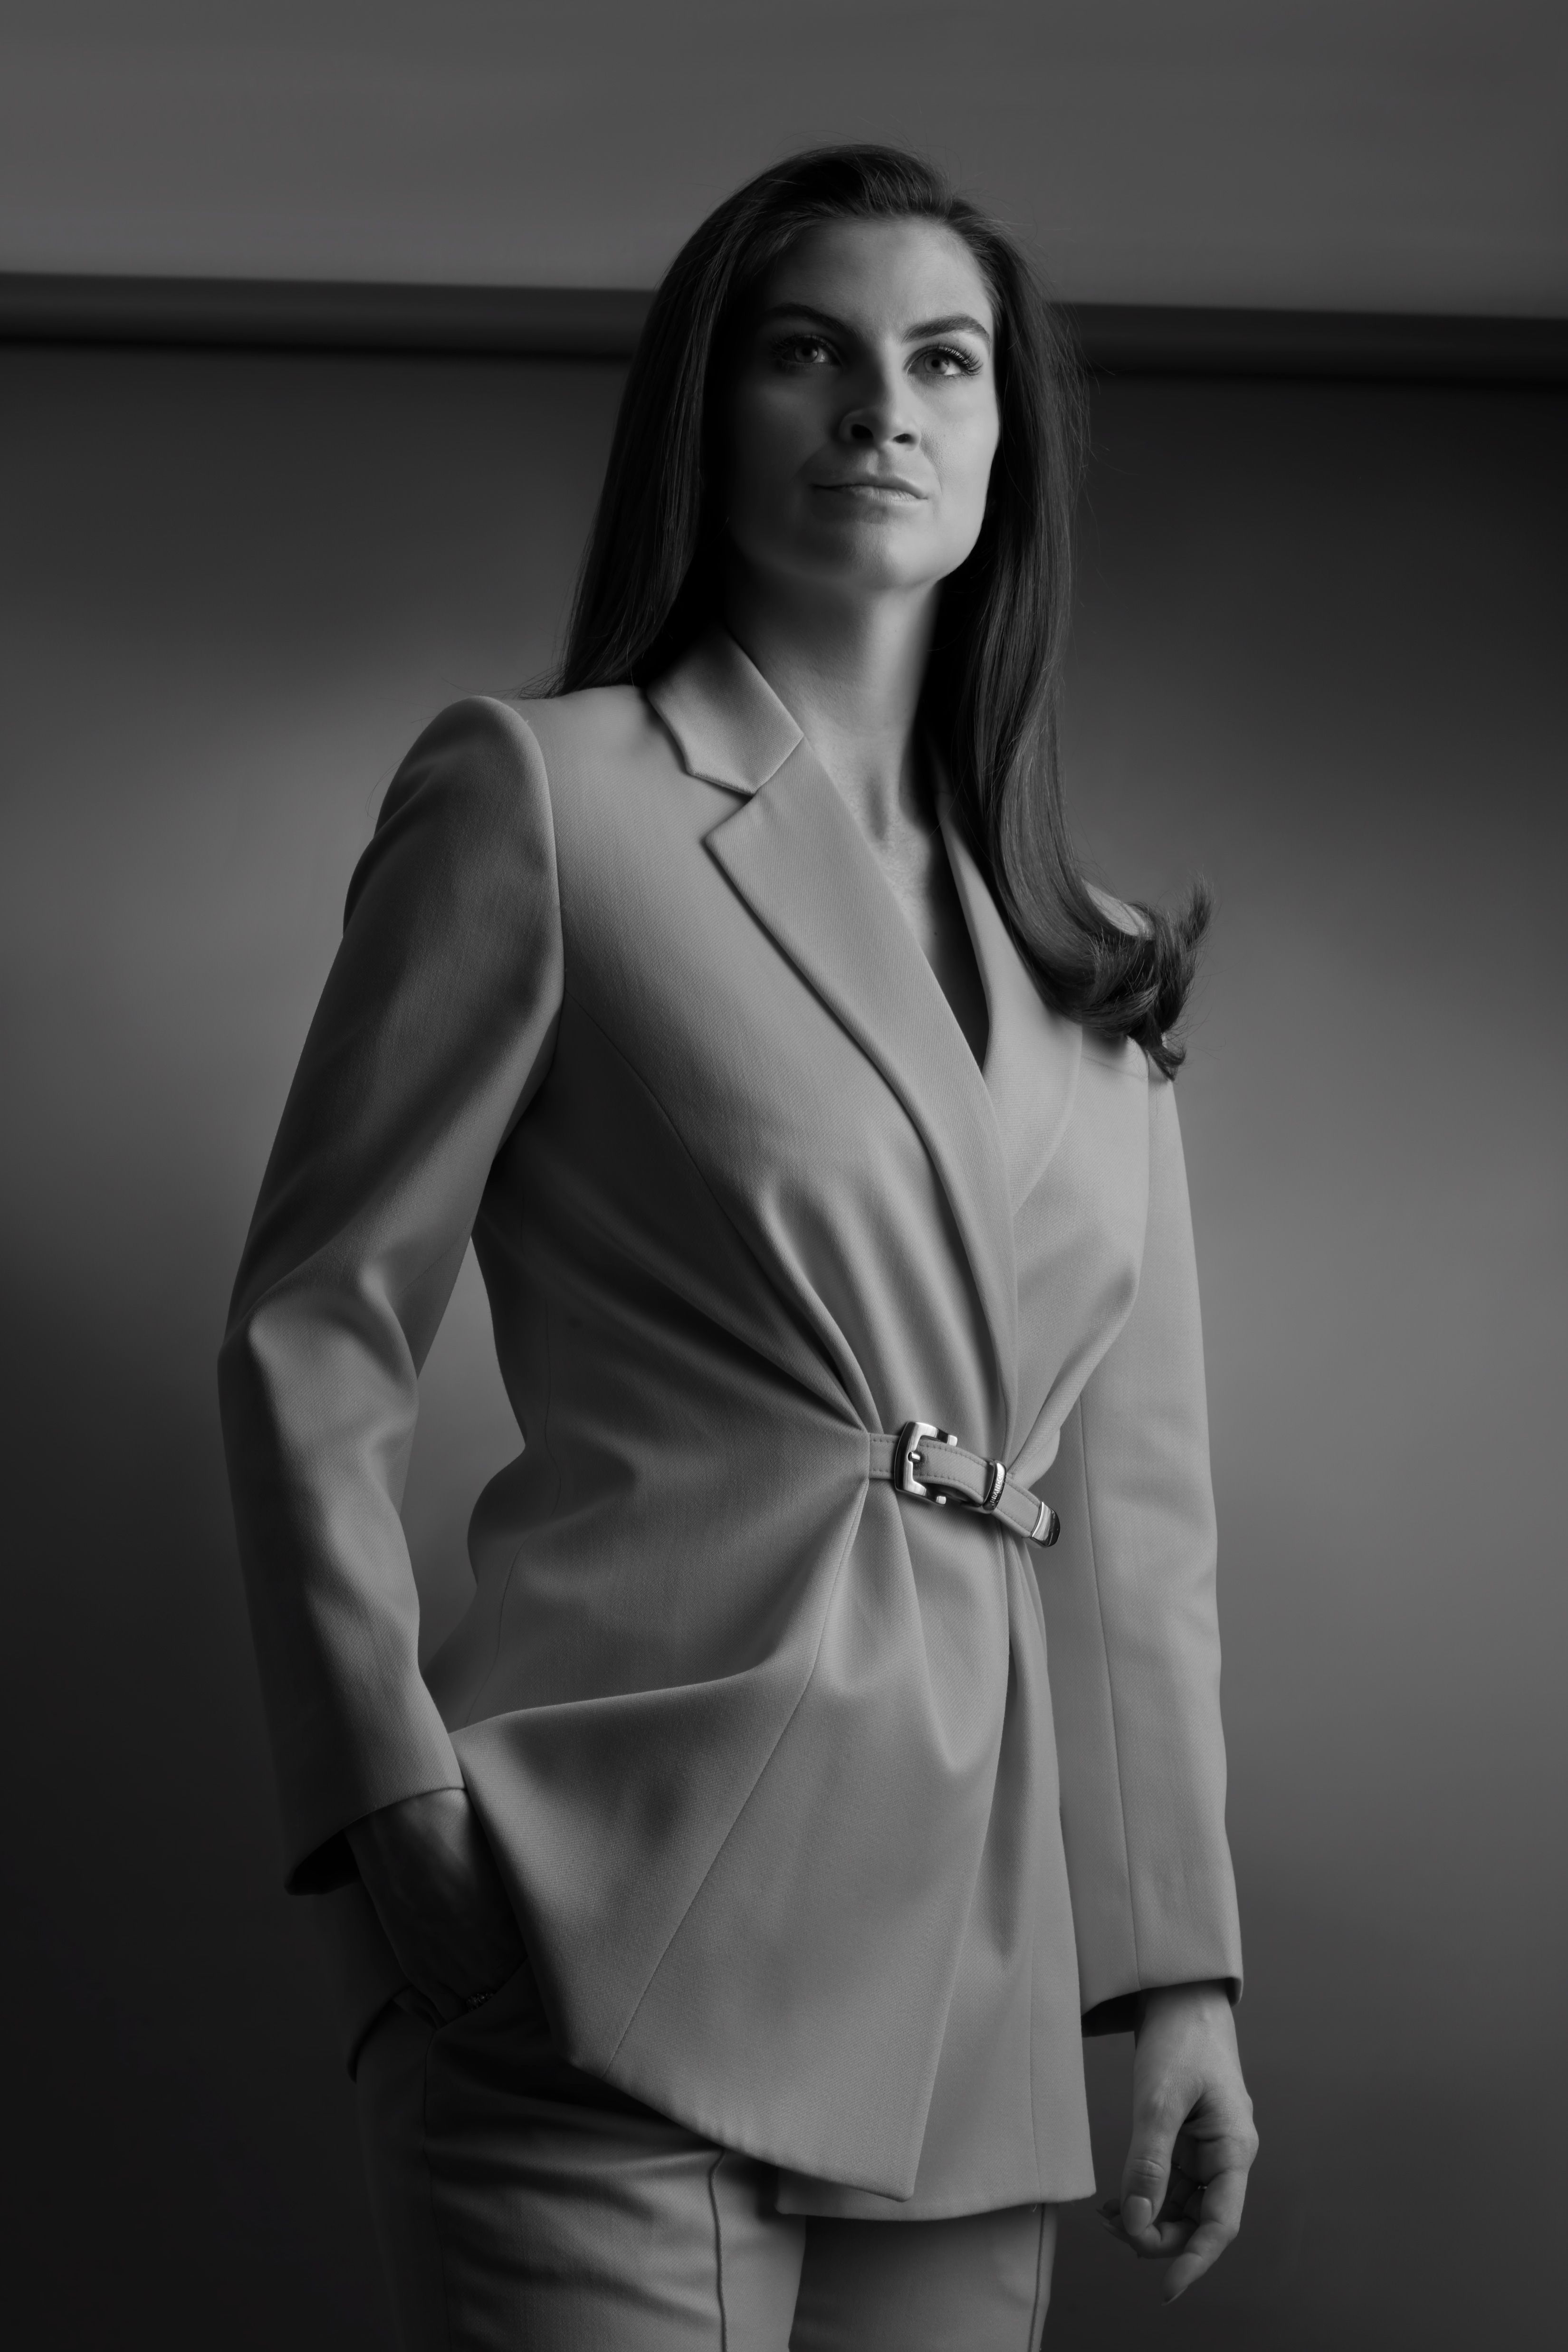 Nasty Gal Boss Sophia Amoruso, Personal Finance Guru - Vox